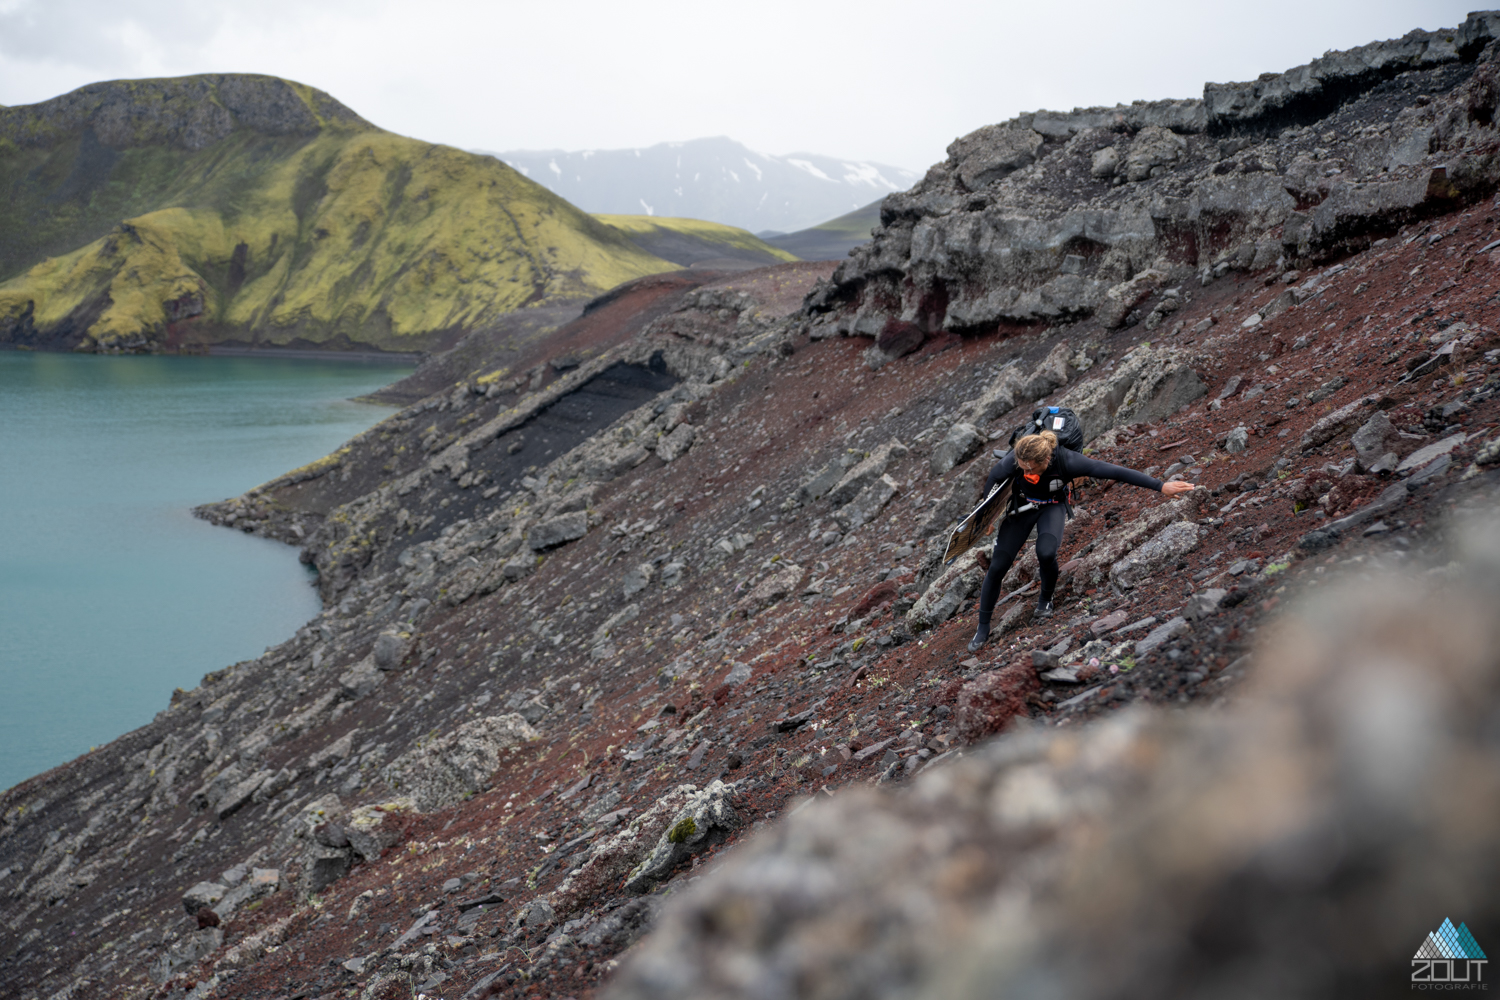 fotograaf rein rijke roderick Pijls kitesurfend vulkaankrater the last line